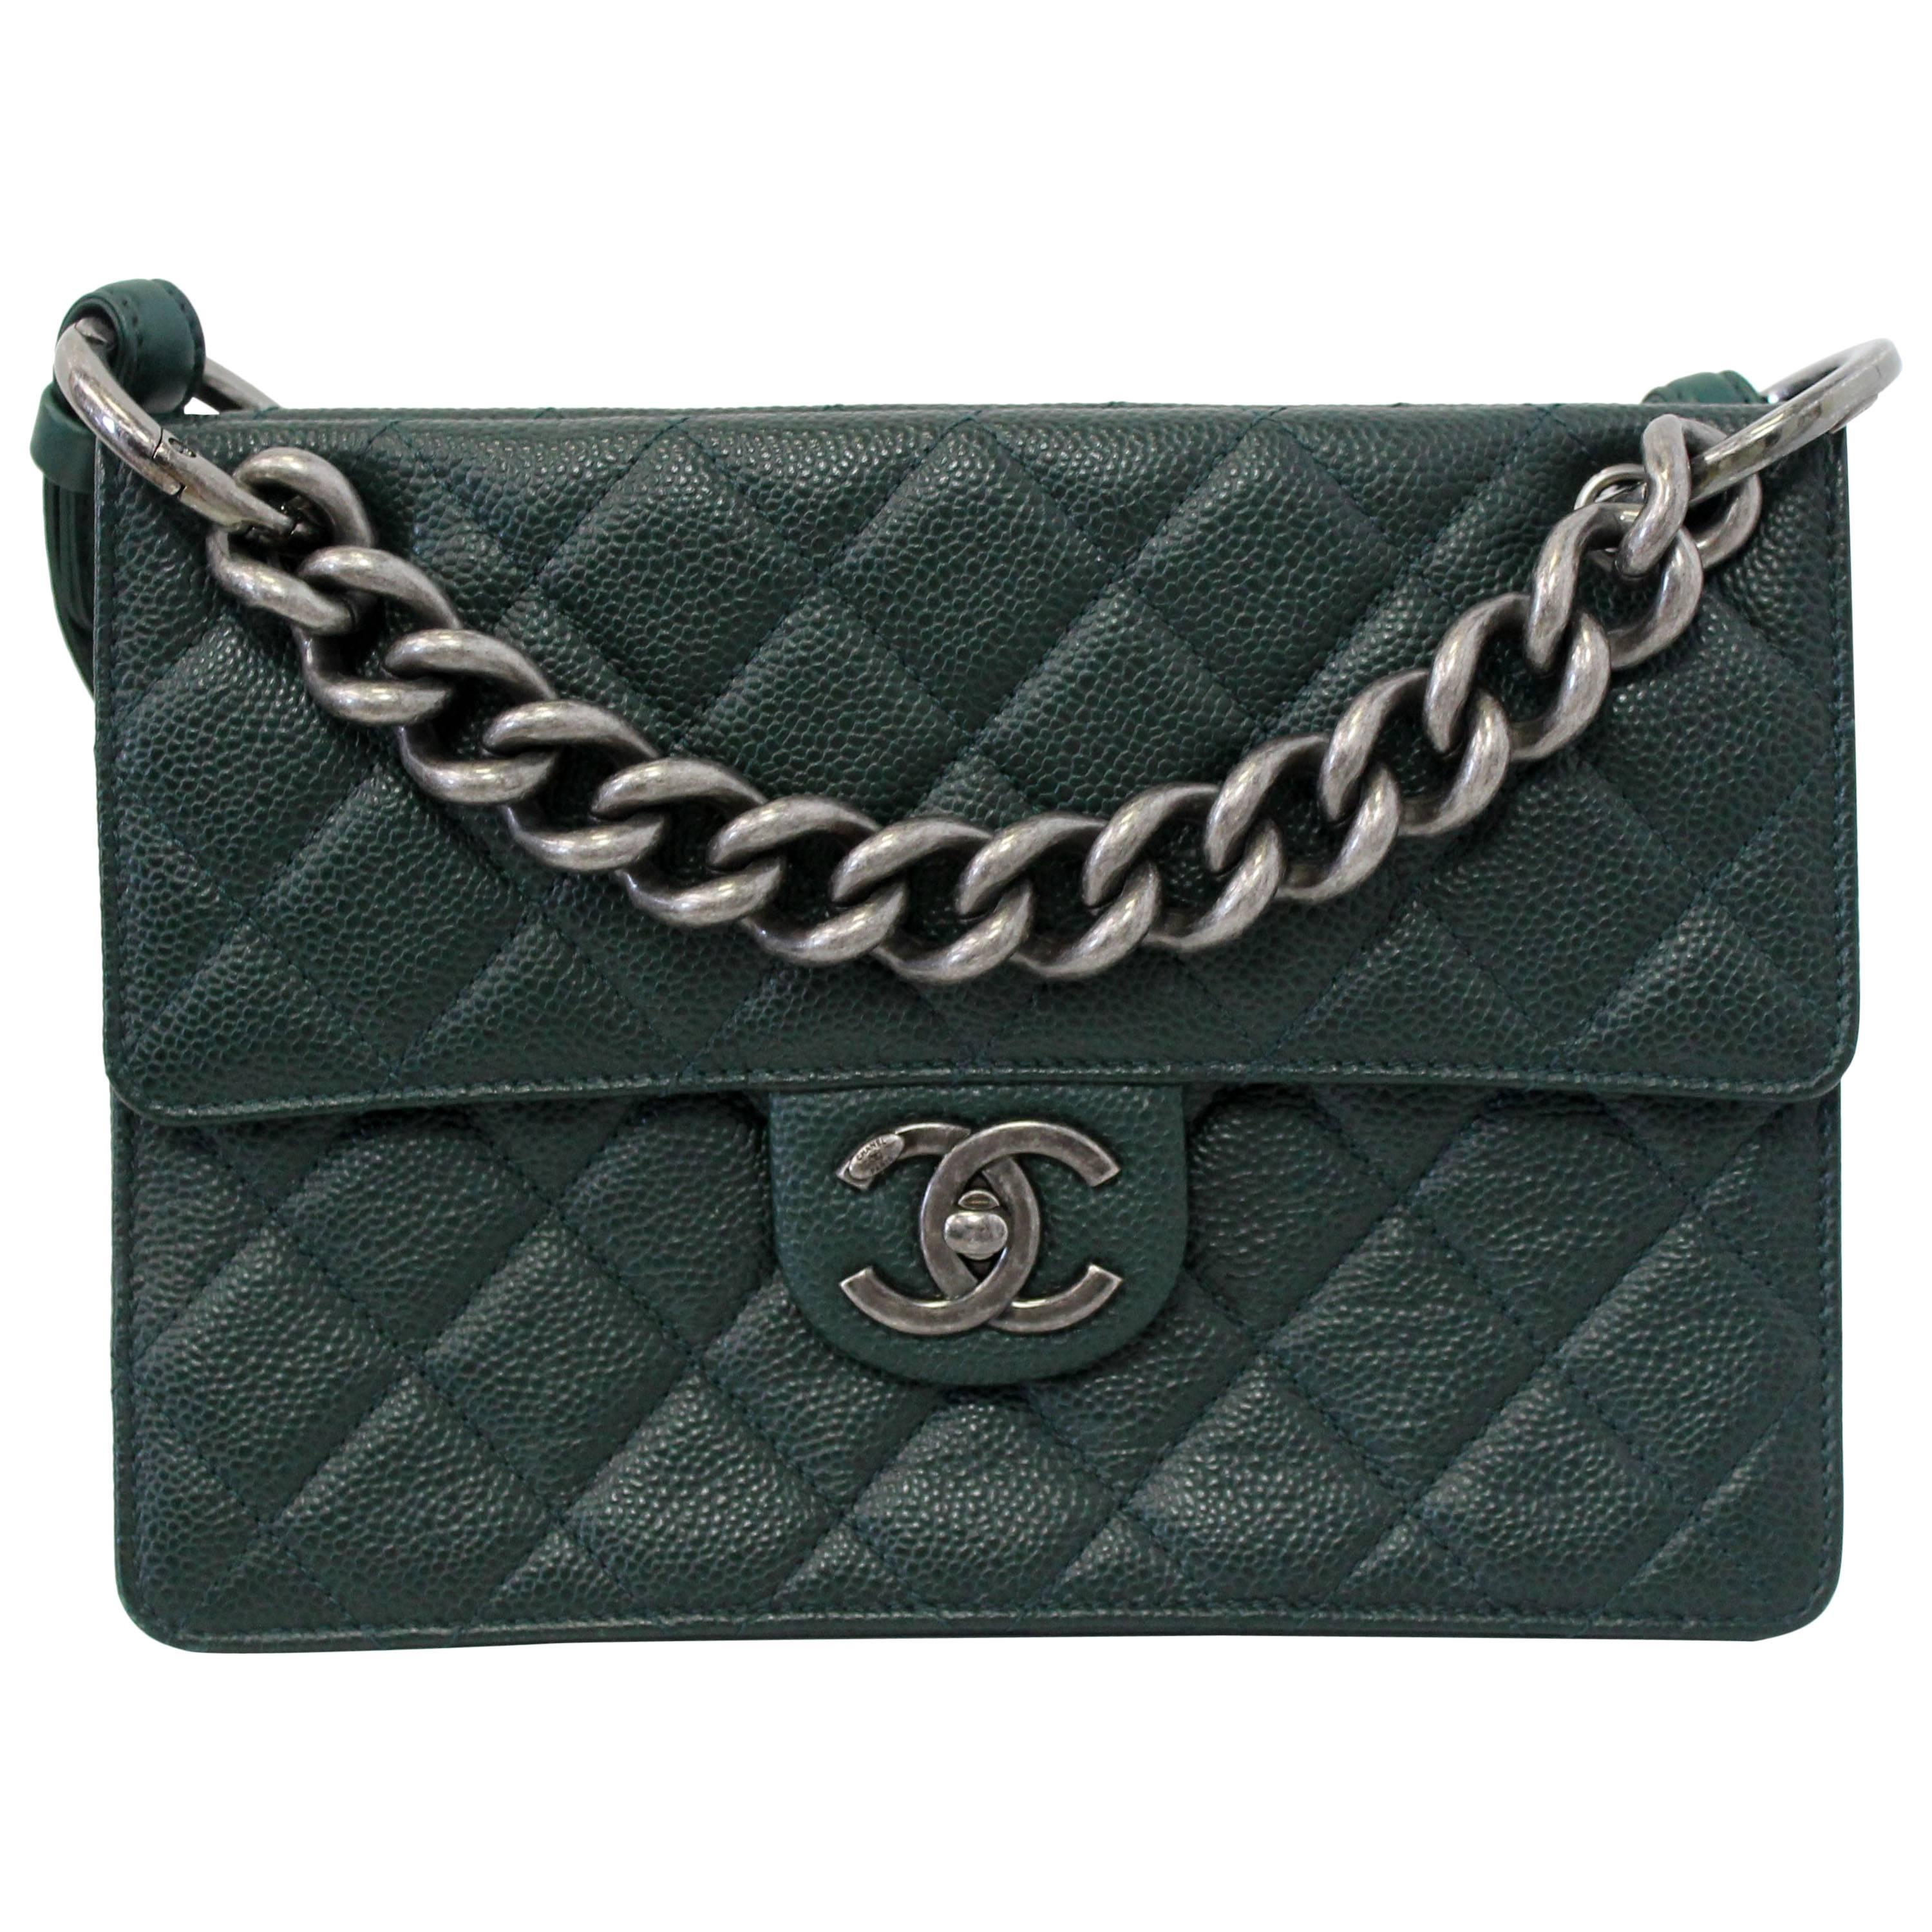 Chanel 2015 / 2016 Dark Green Quilted Caviar Leather Retro Class Medium Flap Bag